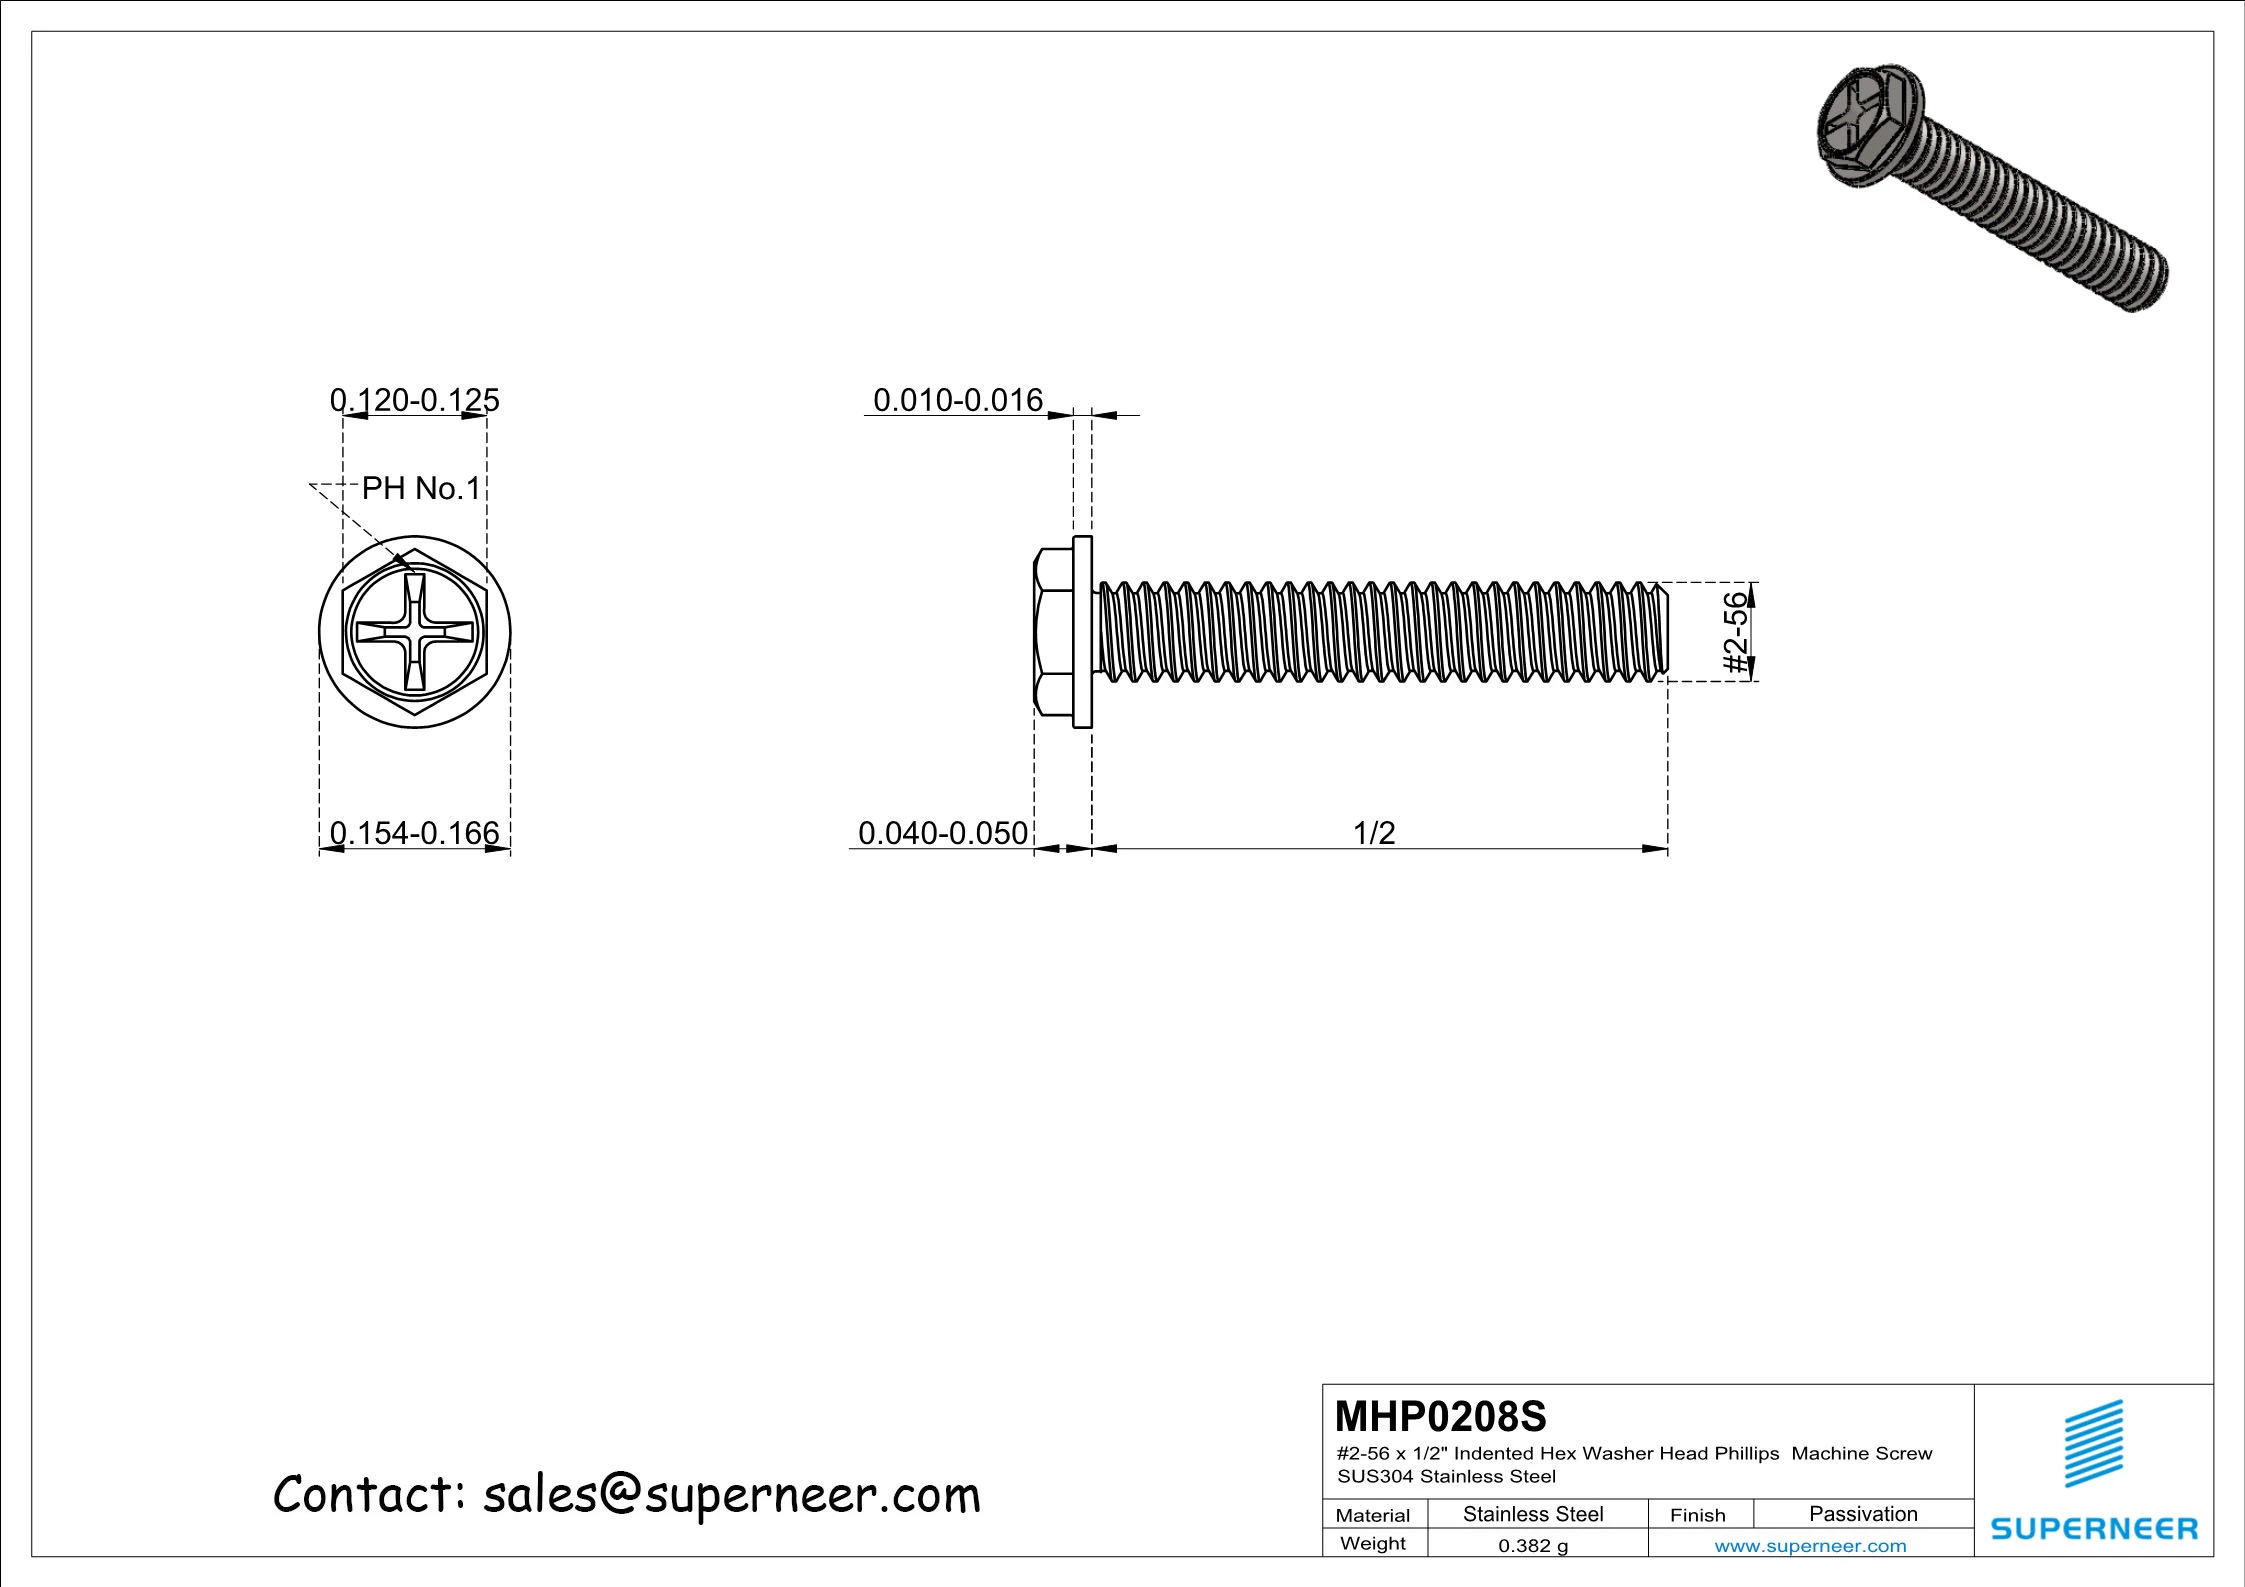 2-56 x 1/2" Indented Hex Washer Head Phillips Machine Screw SUS304 Stainless Steel Inox